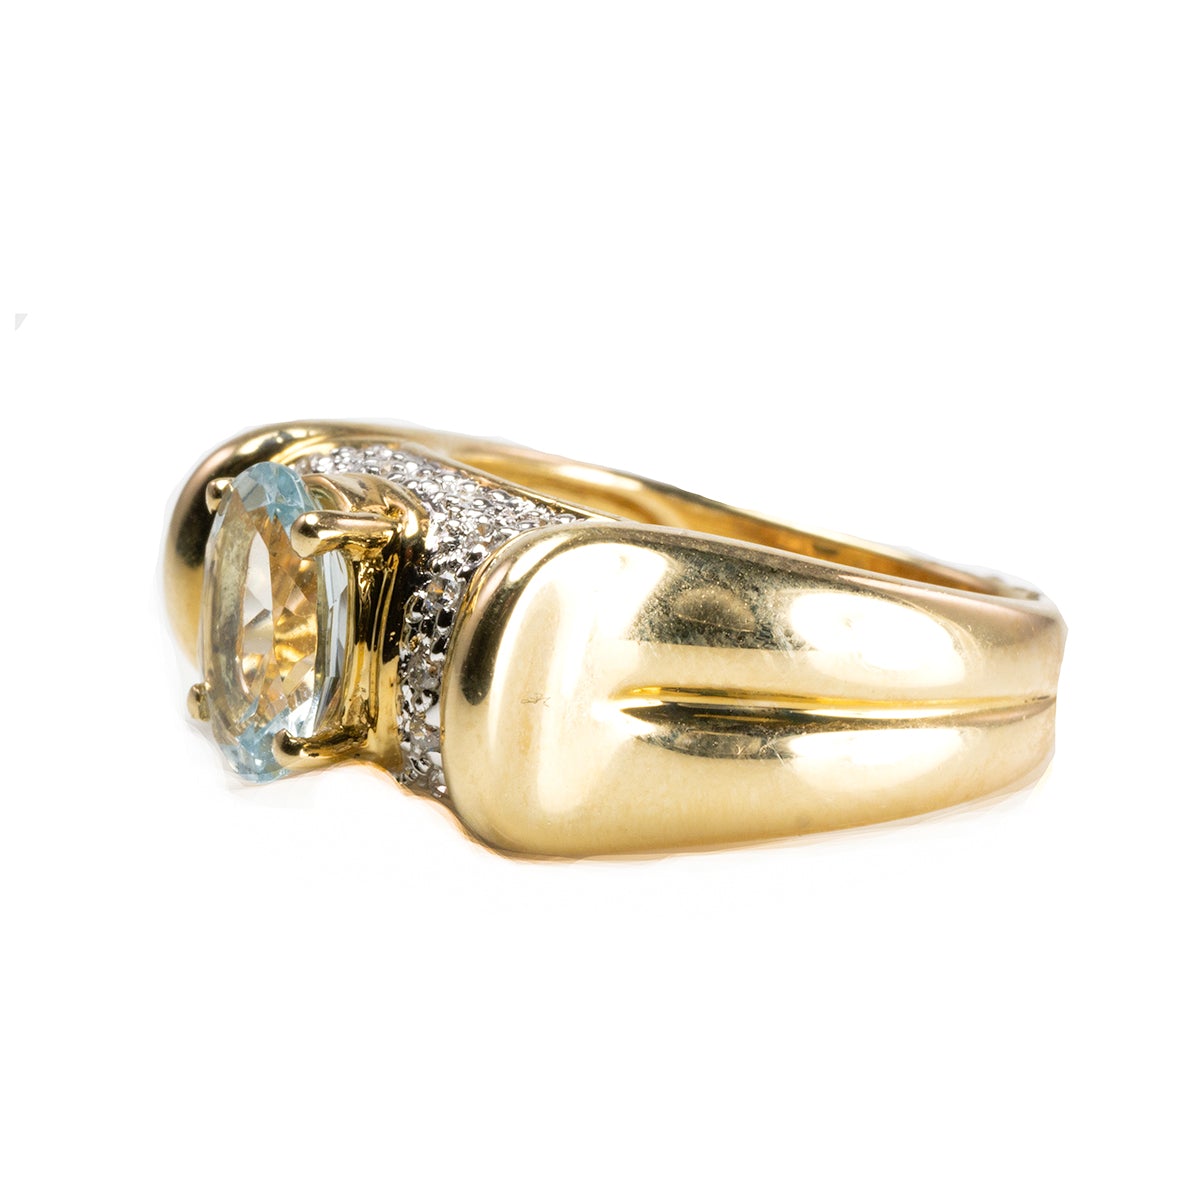 Great Lakes Boutique 10 k Yellow Gold Aqua Marine and Diamond Ring